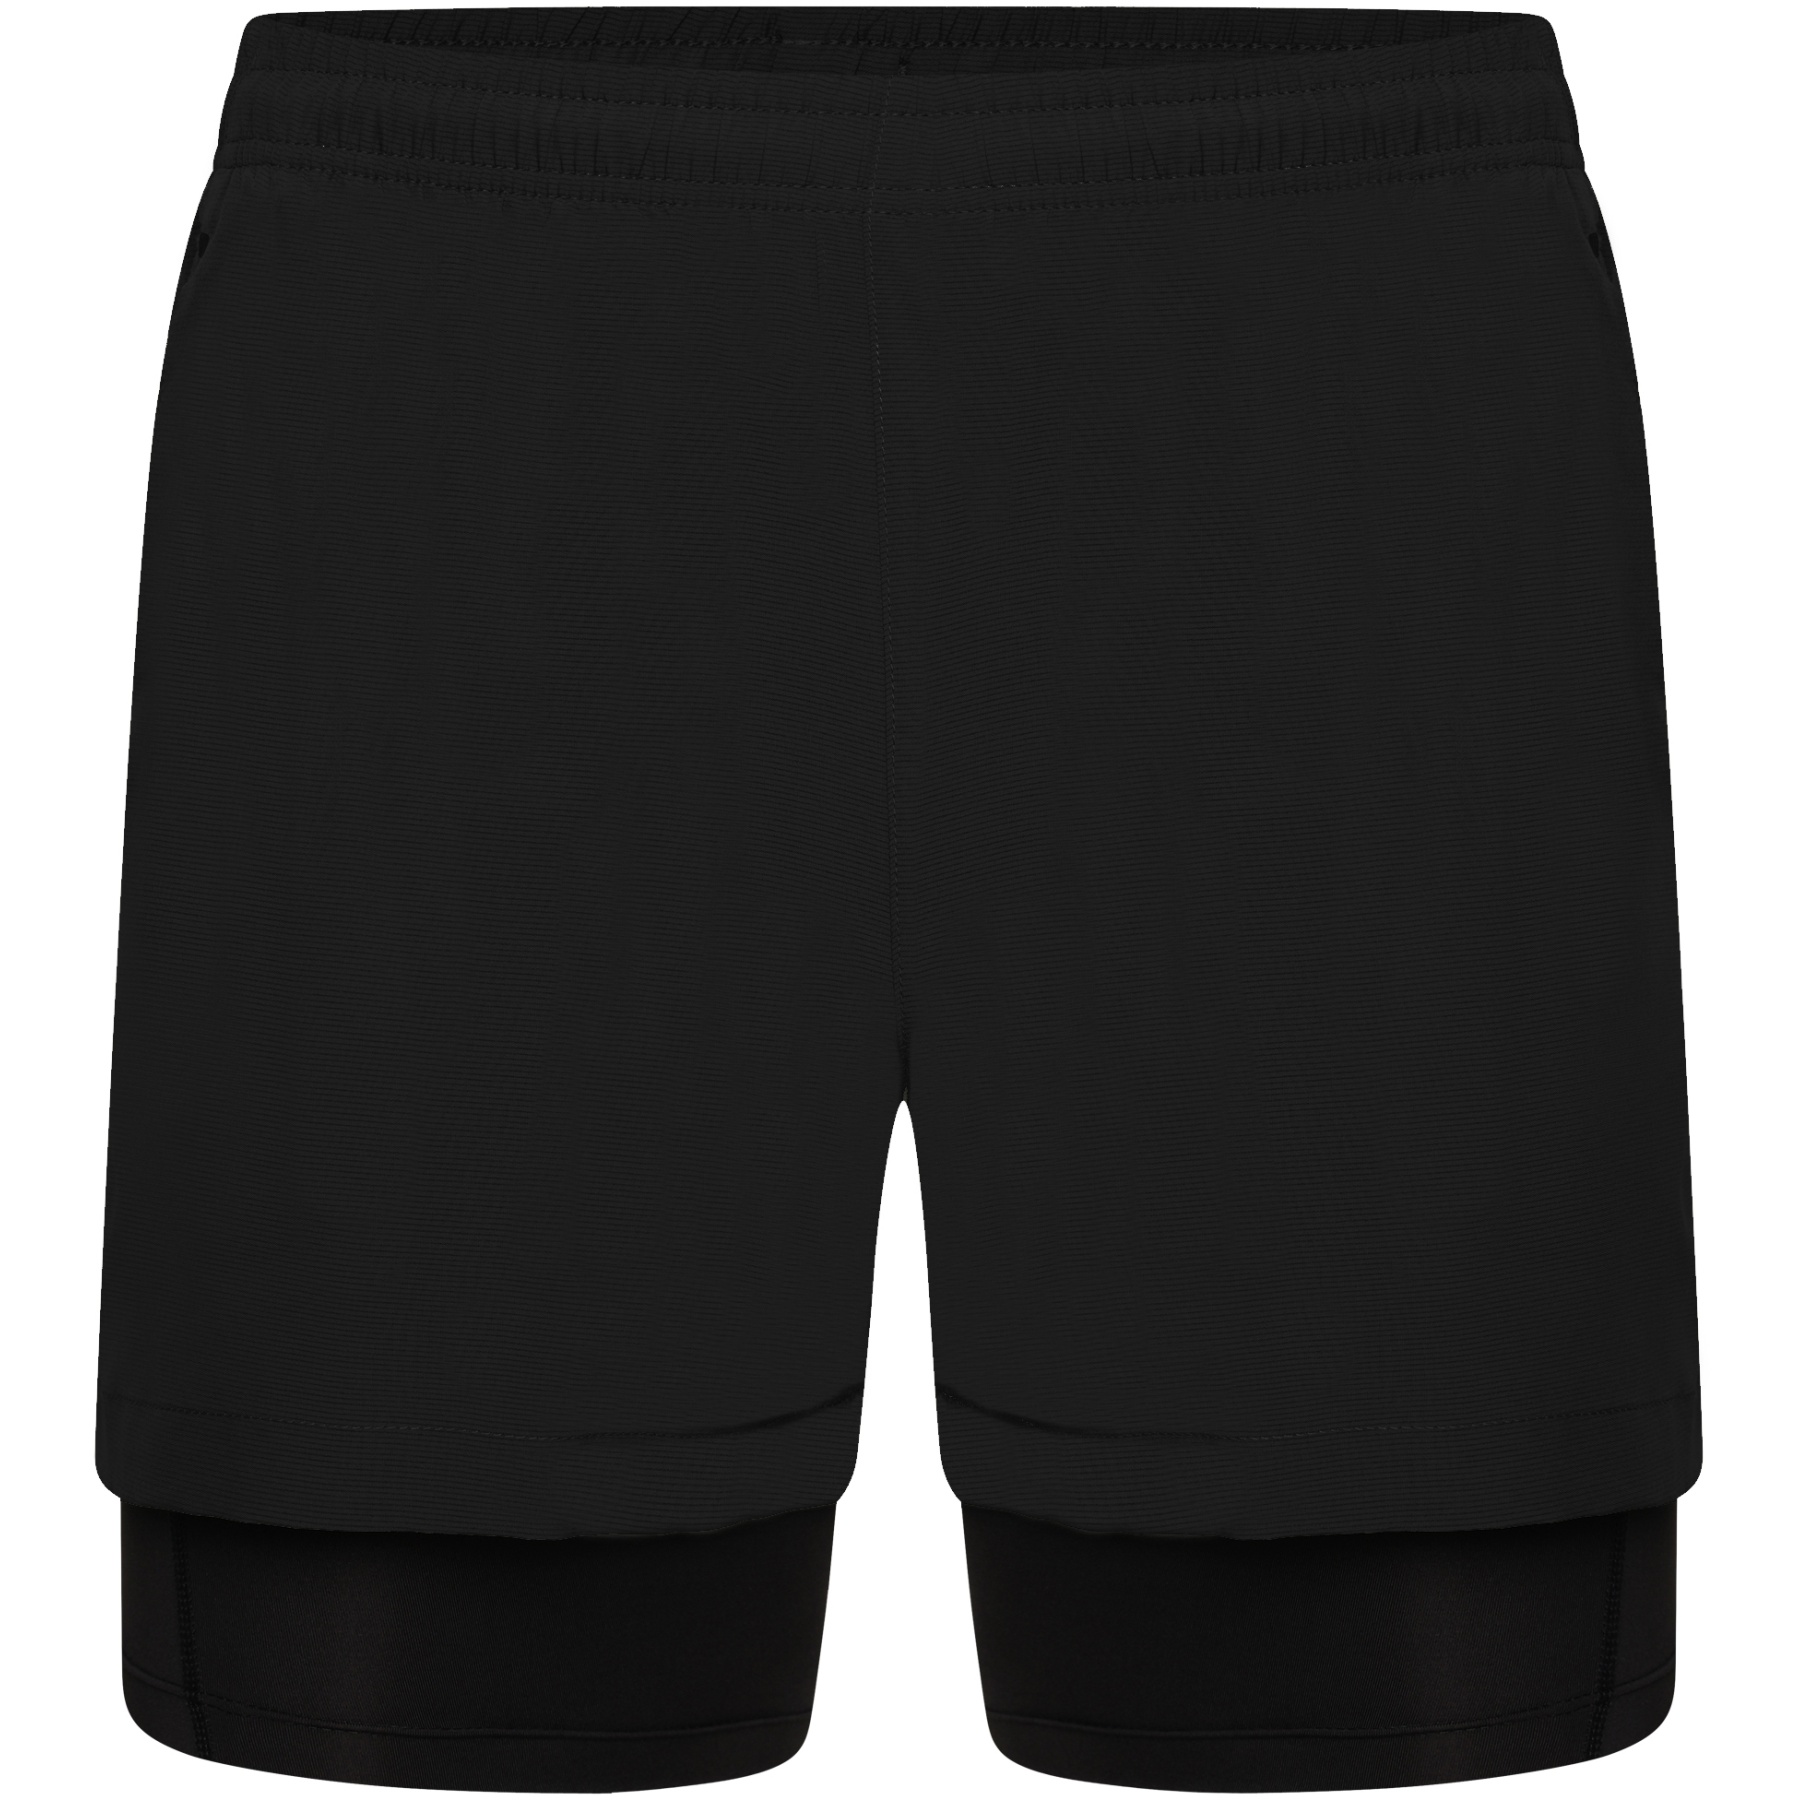 Productfoto van Dare 2b Recreate II Shorts - 800 Black